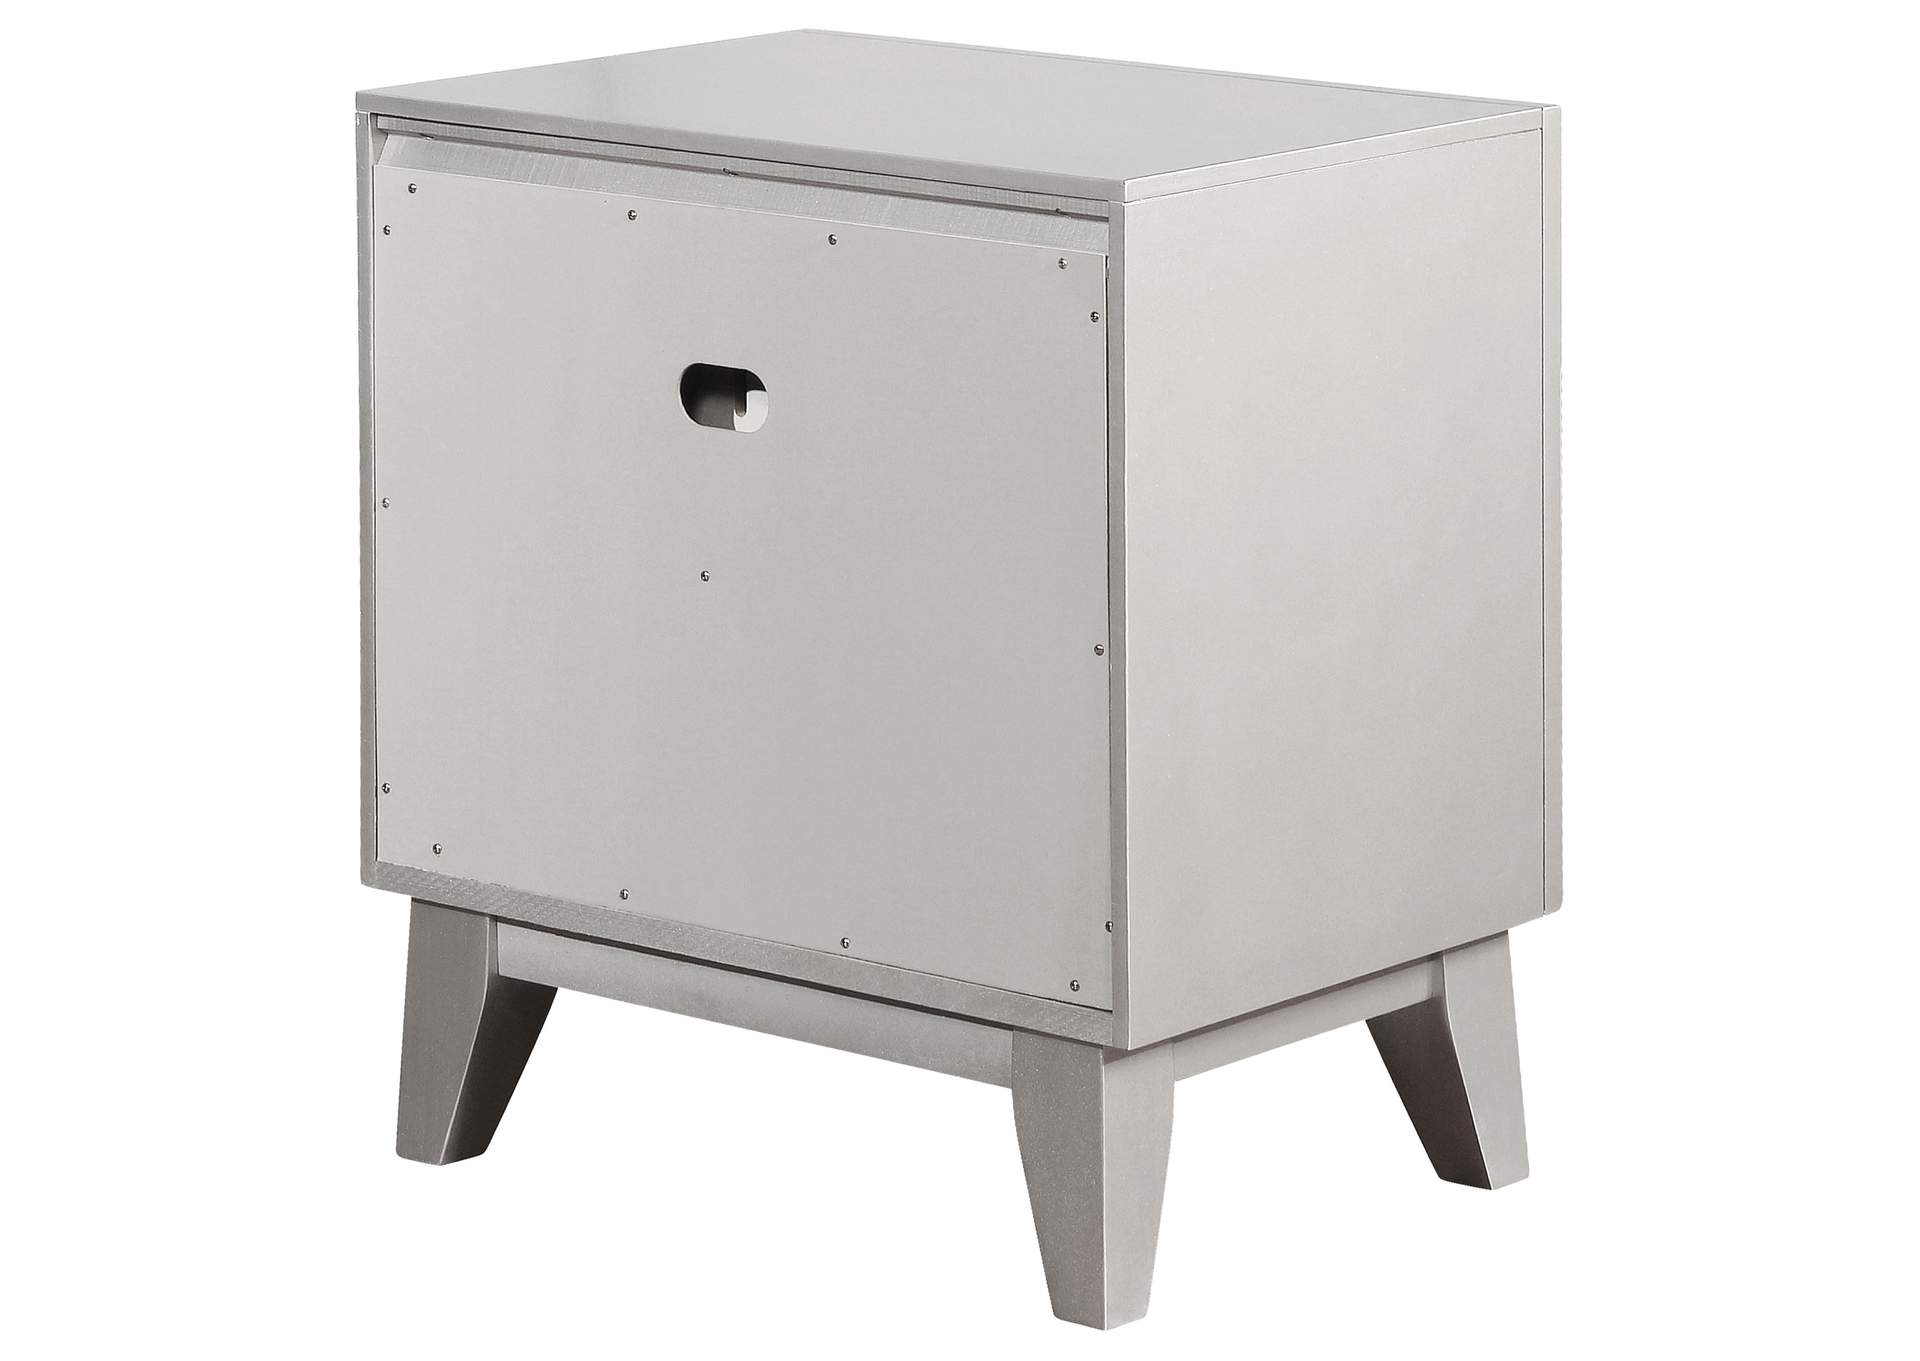 Leighton 2-drawer Nightstand Metallic Mercury,Coaster Furniture